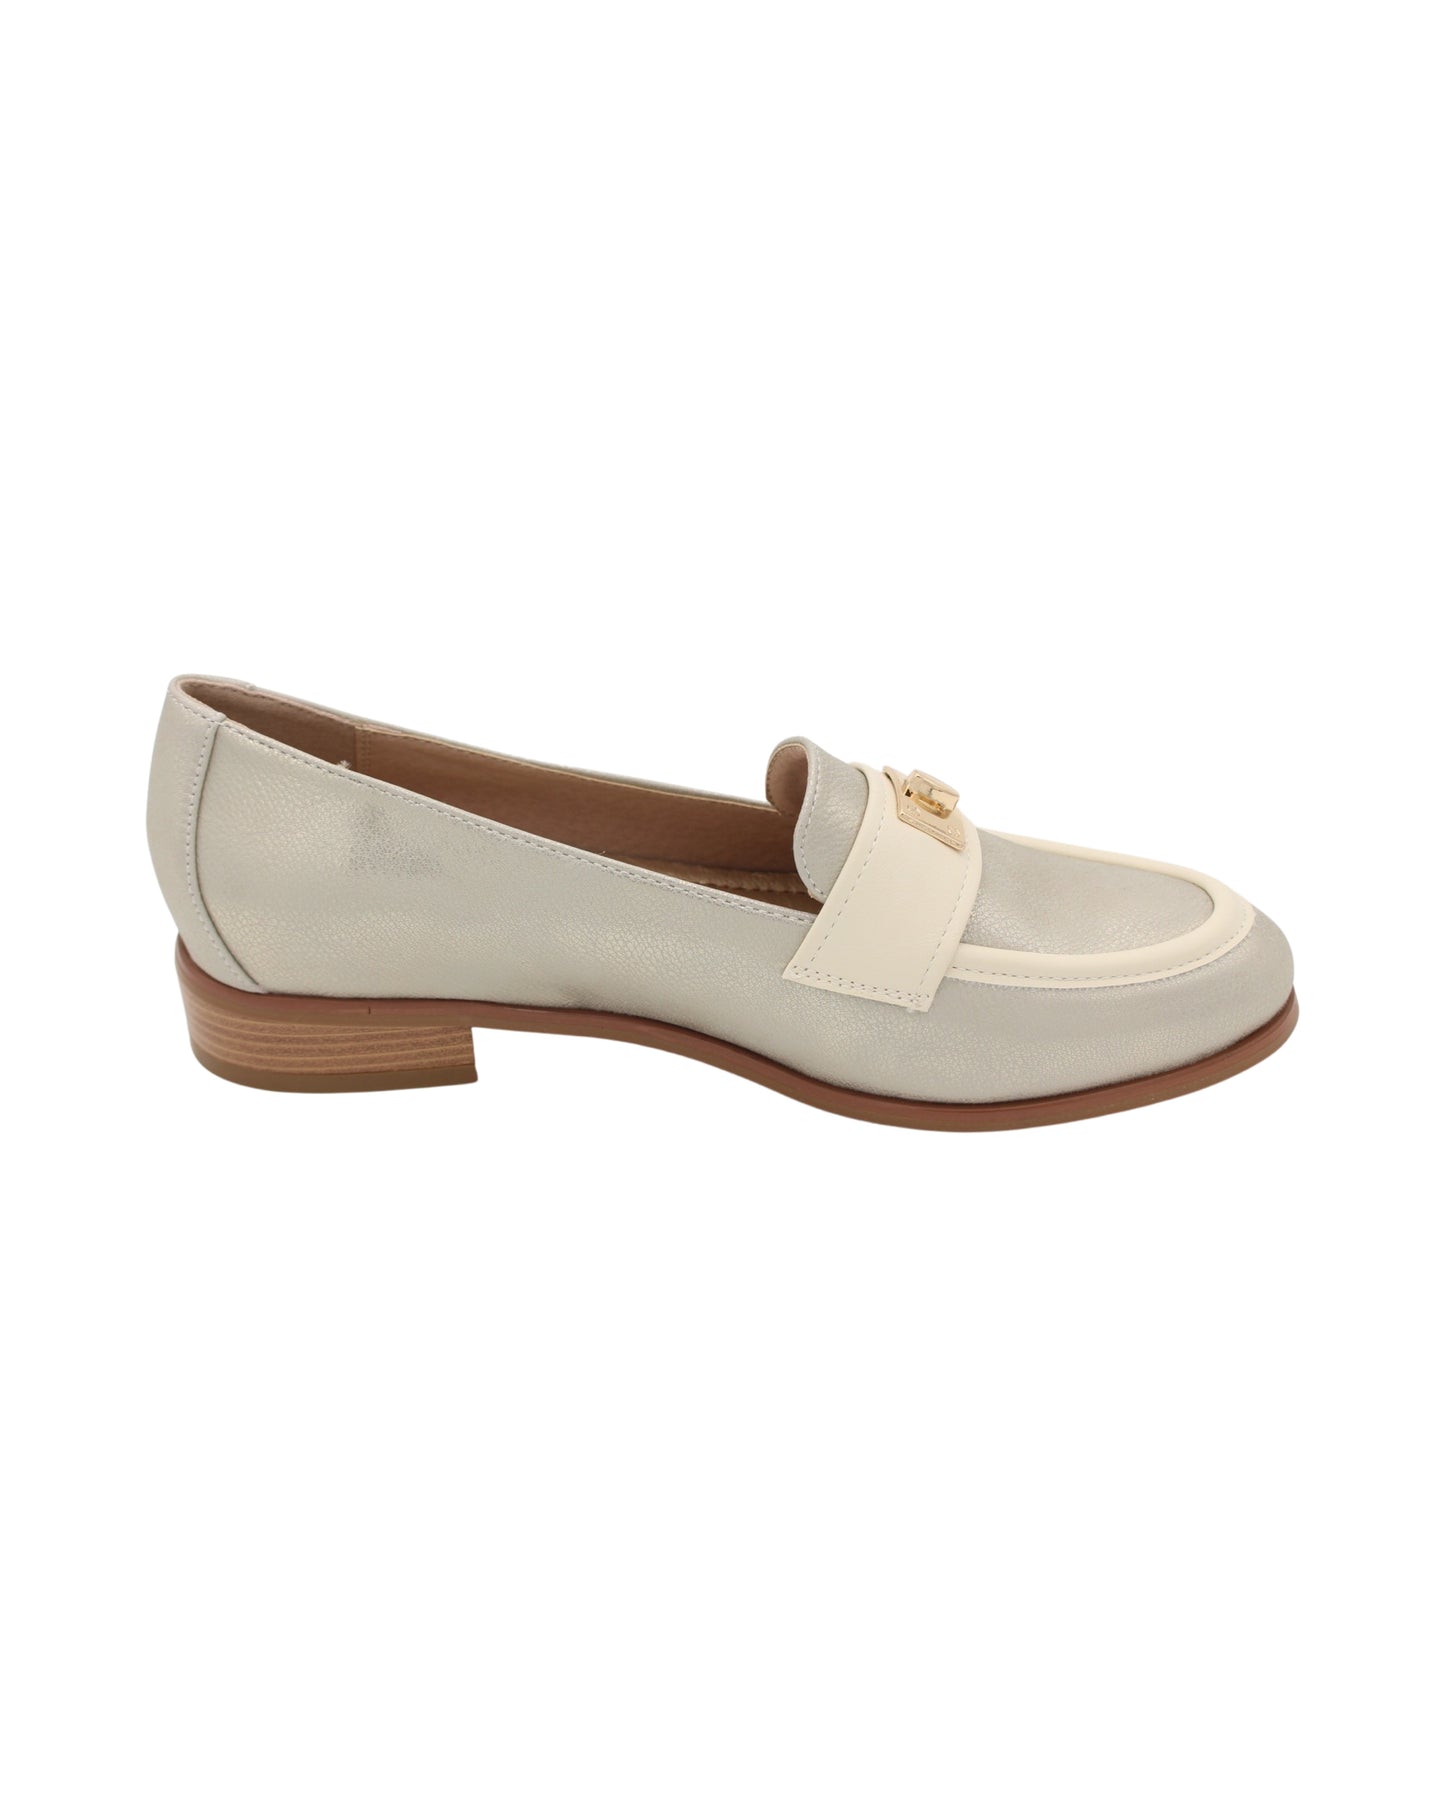 Zanni - Ladies Shoes Loafers Grey, Cream (2155)